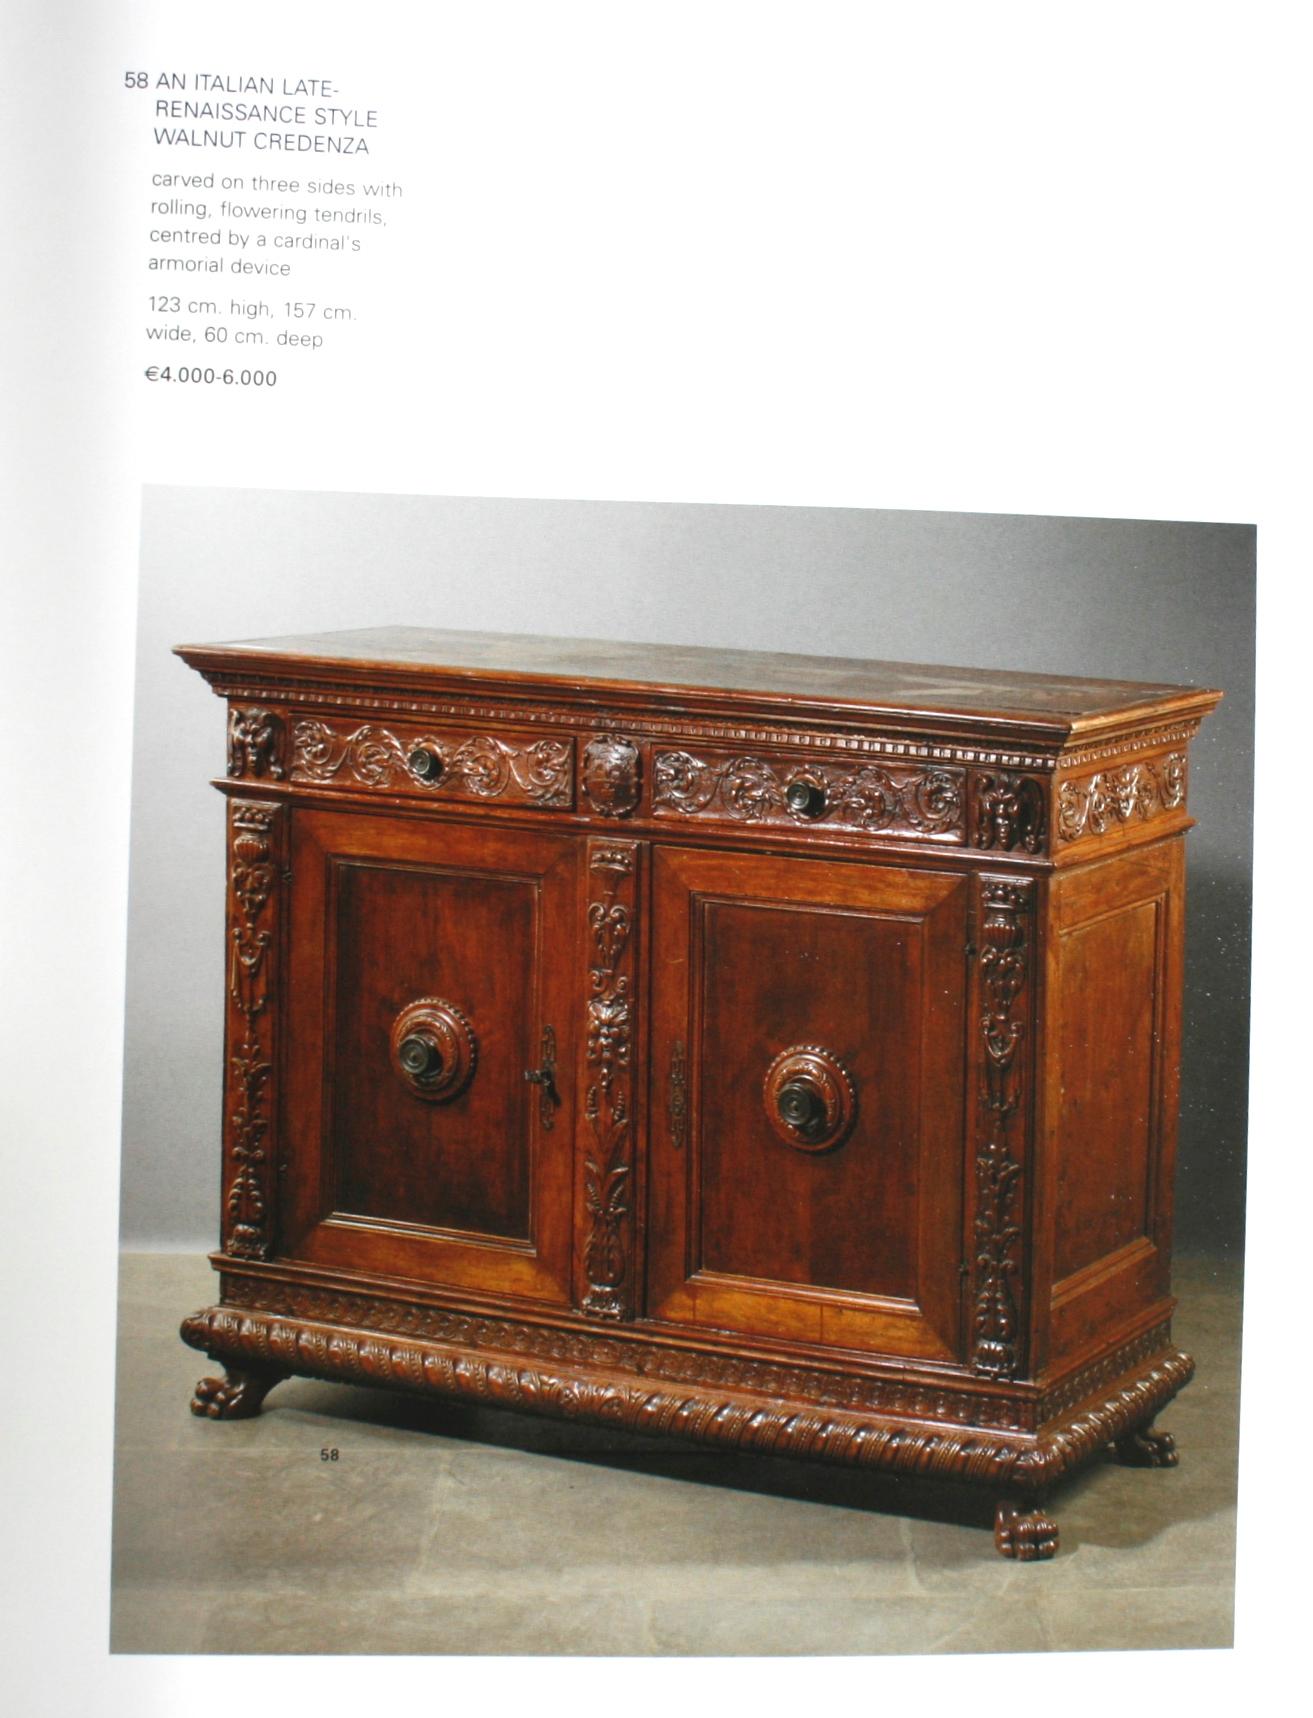 Sotheby's Paul De Grande Restoration Project 5/9/04, Bruge In Good Condition For Sale In valatie, NY